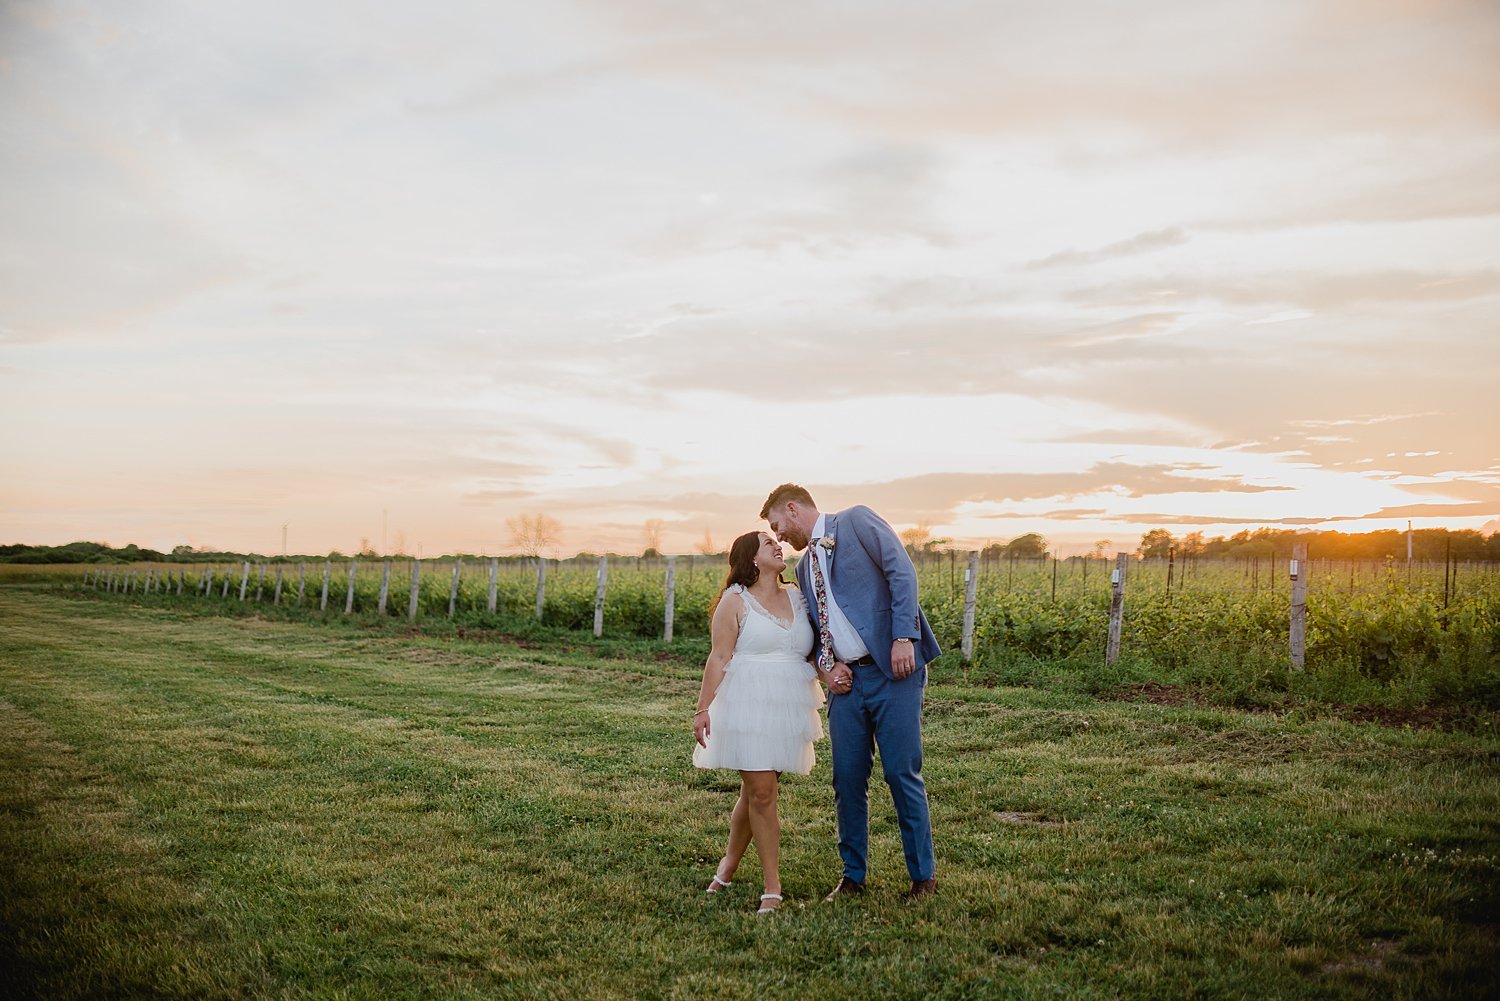 Casa Dea Winery Wedding in Prince Edward County | Prince Edward County Wedding Photographer | Holly McMurter Photographs_0130.jpg